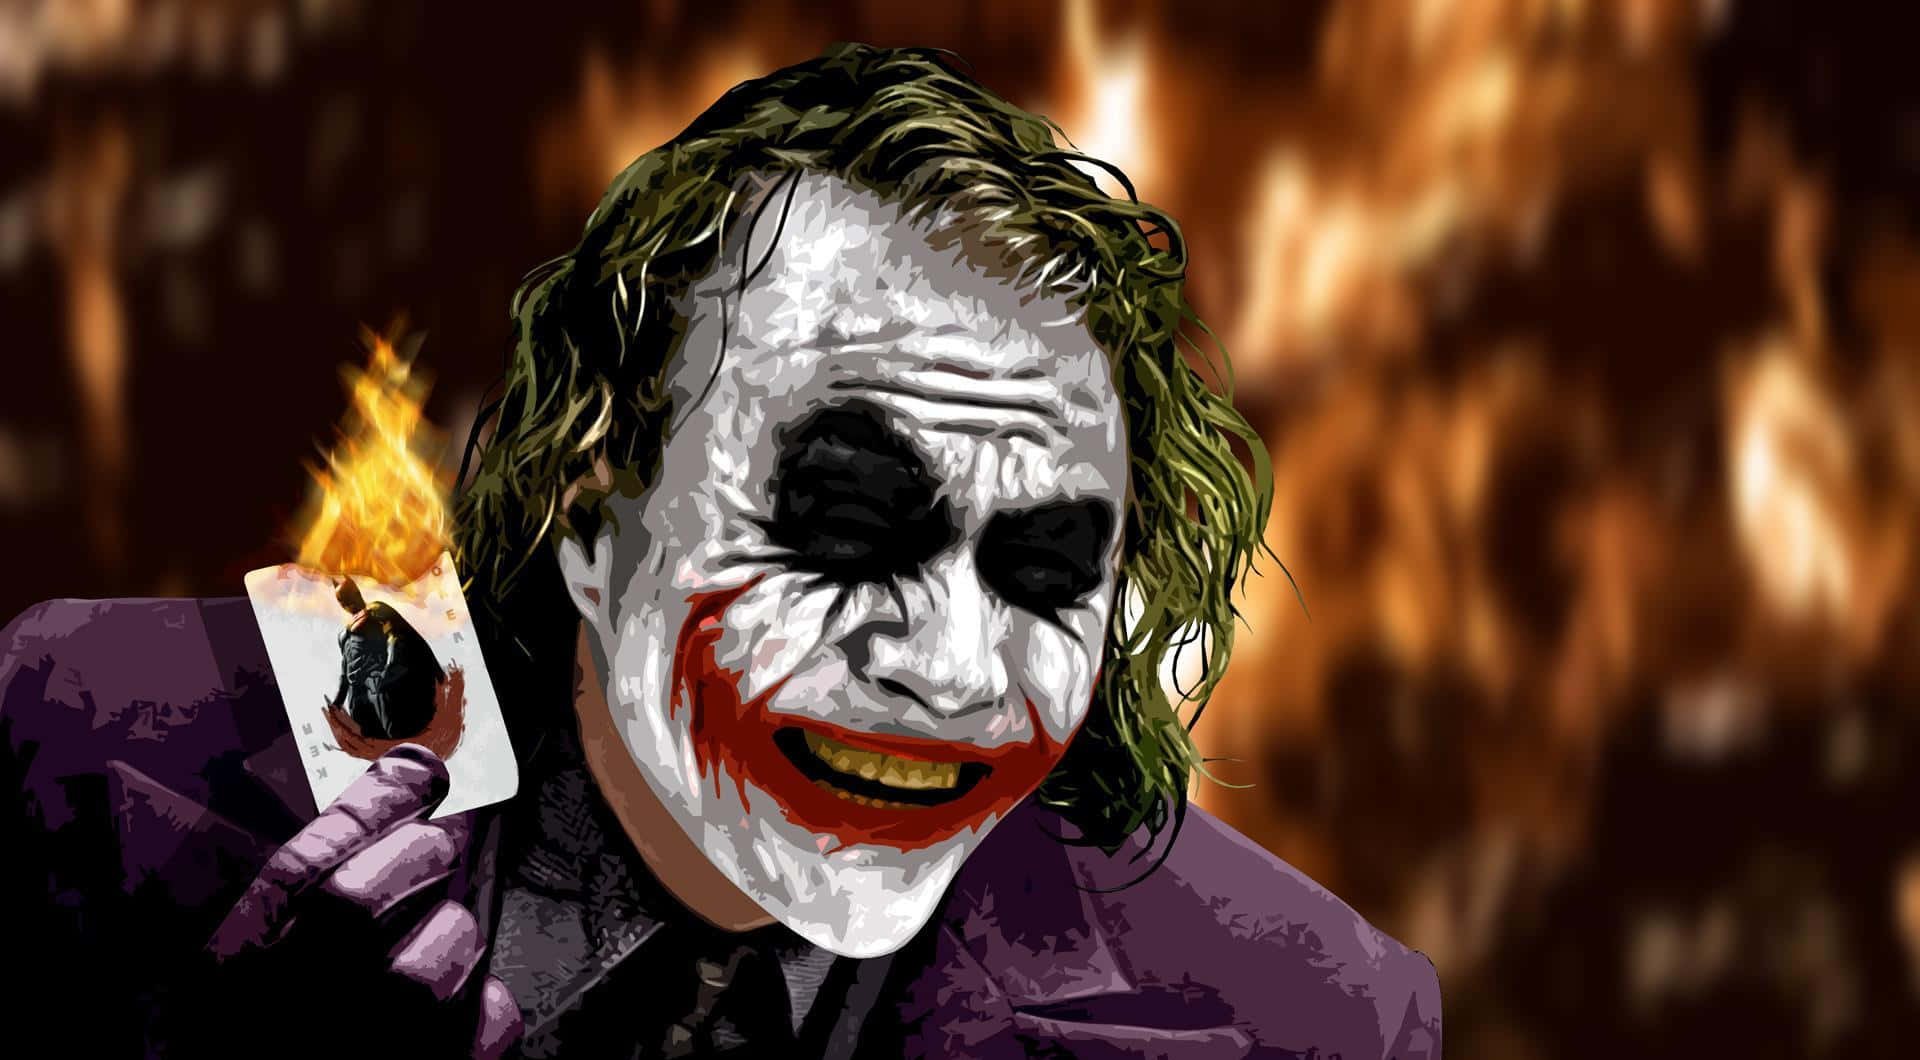 Sinister Joker Laughing In Vibrant Colors Background